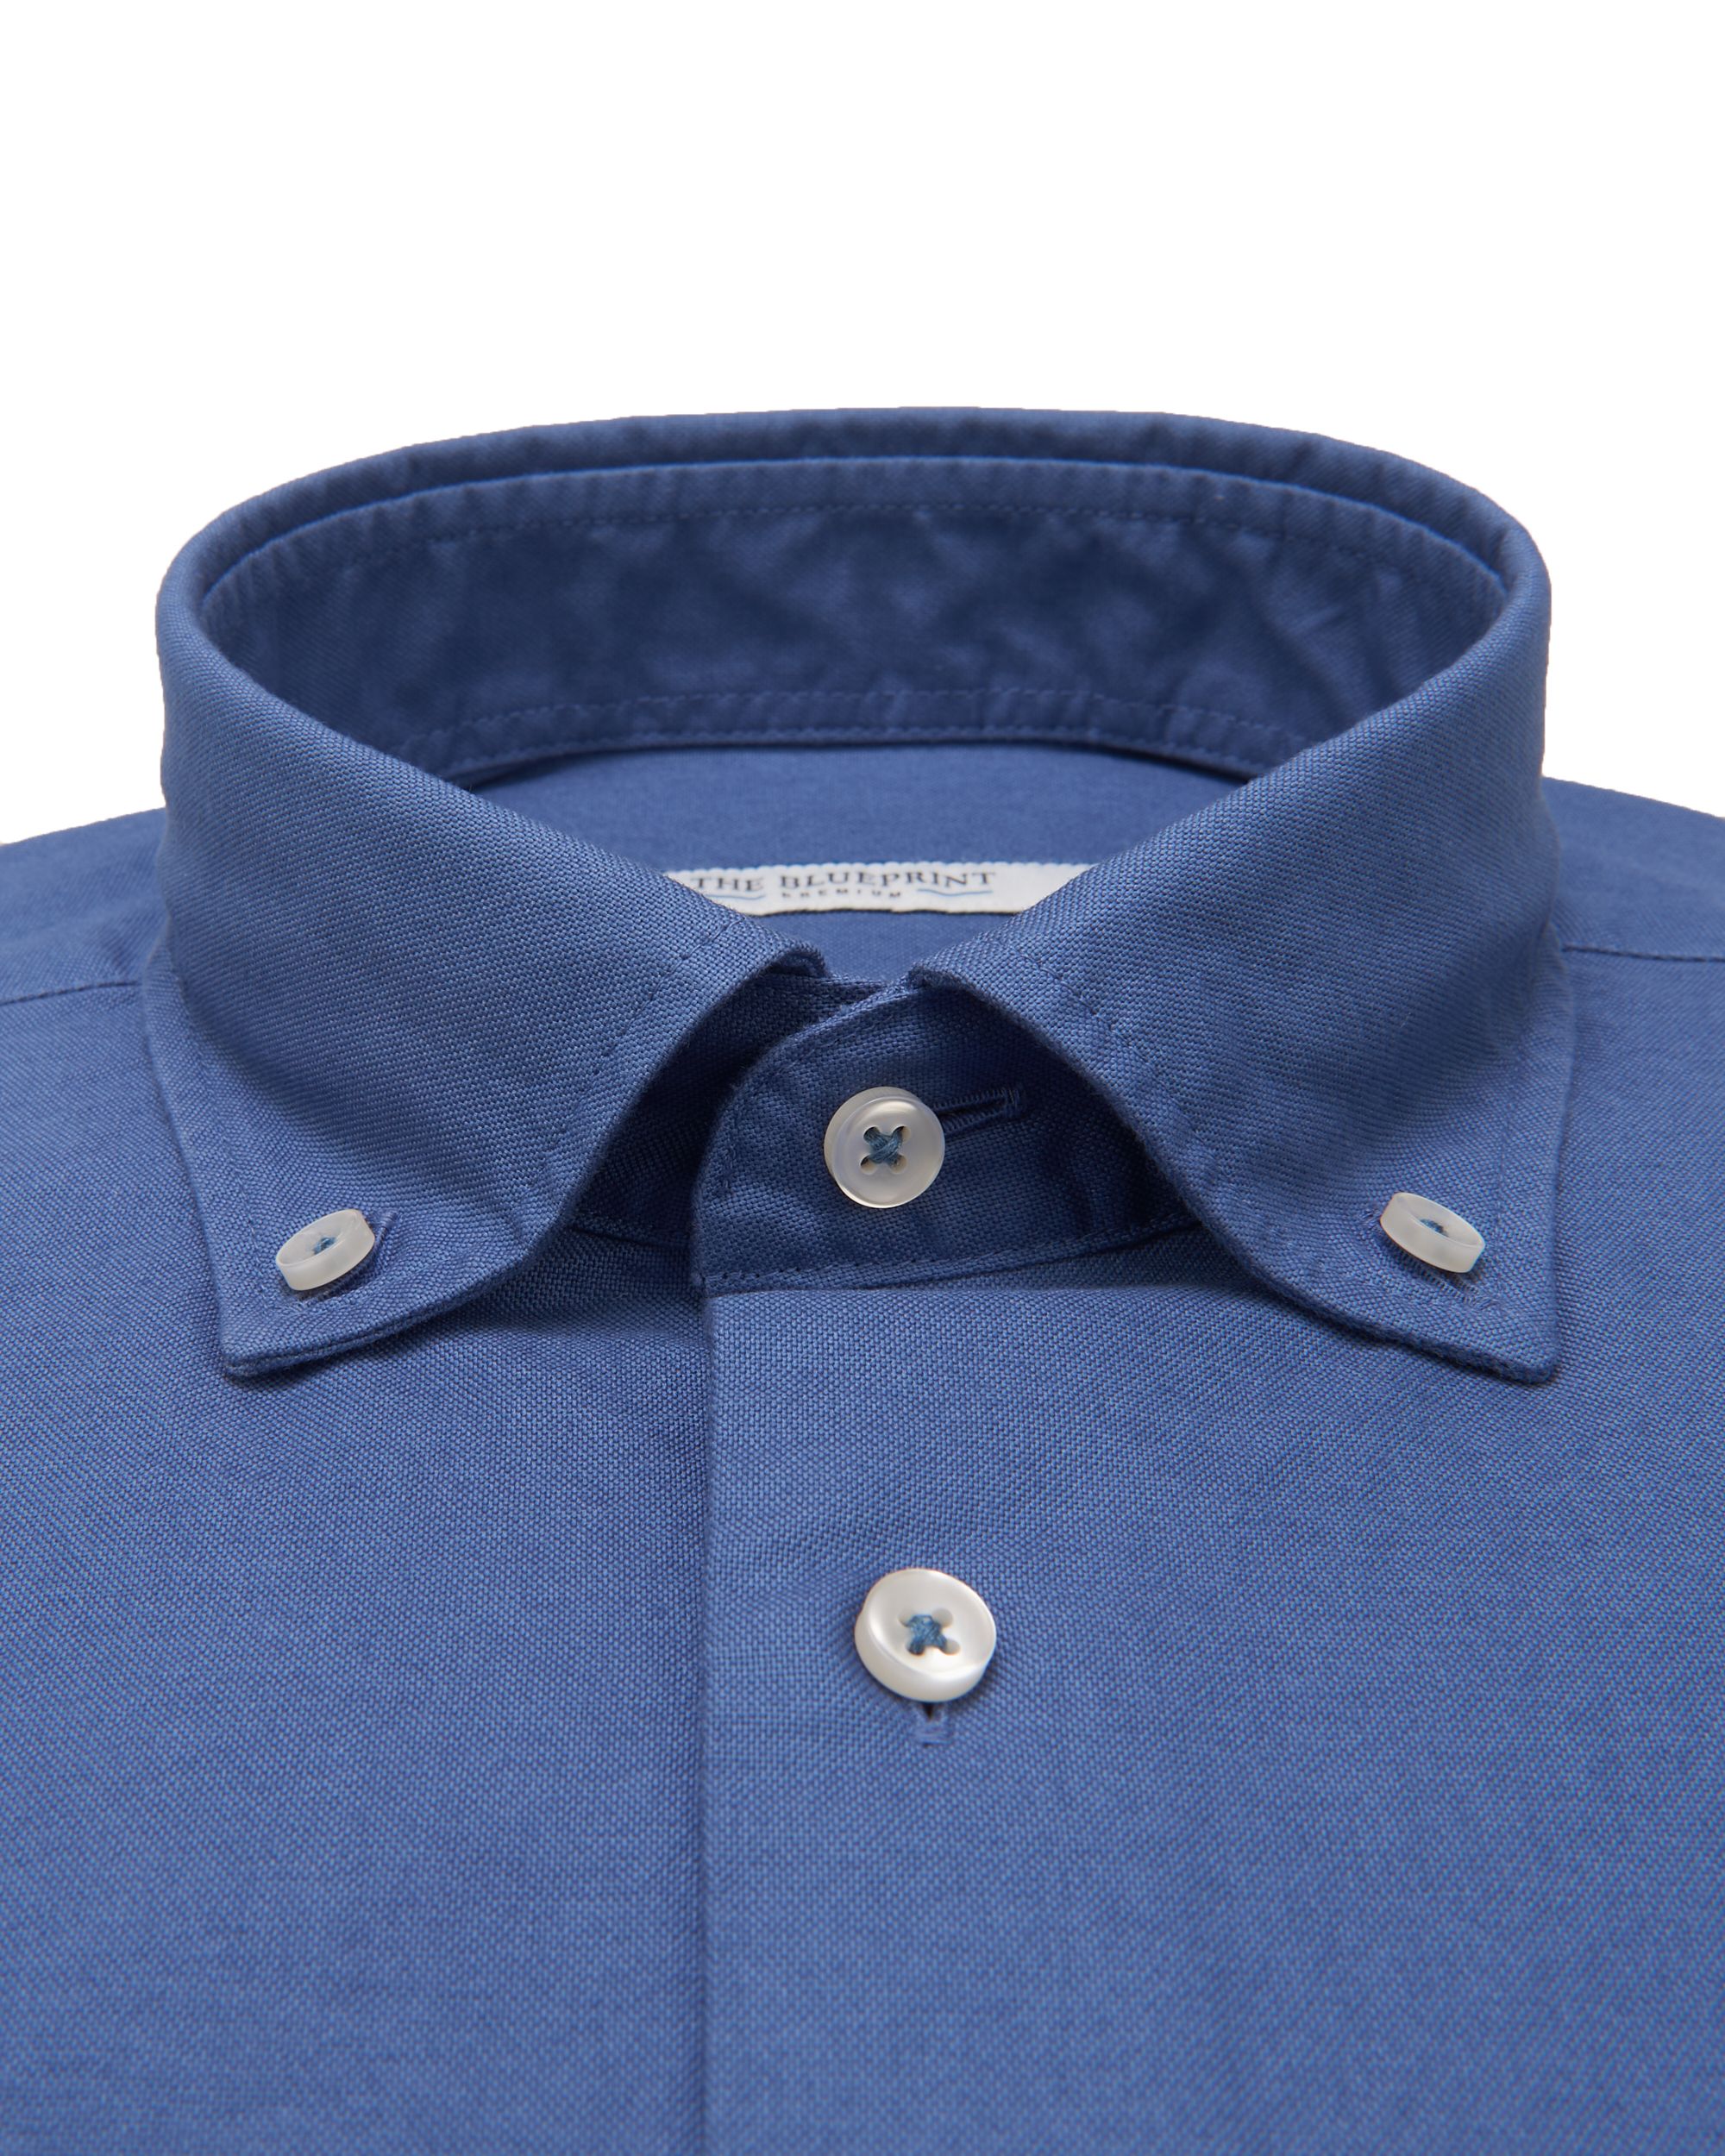 The BLUEPRINT Premium Trendy Overhemd LM Blue Marine 078401-005-L